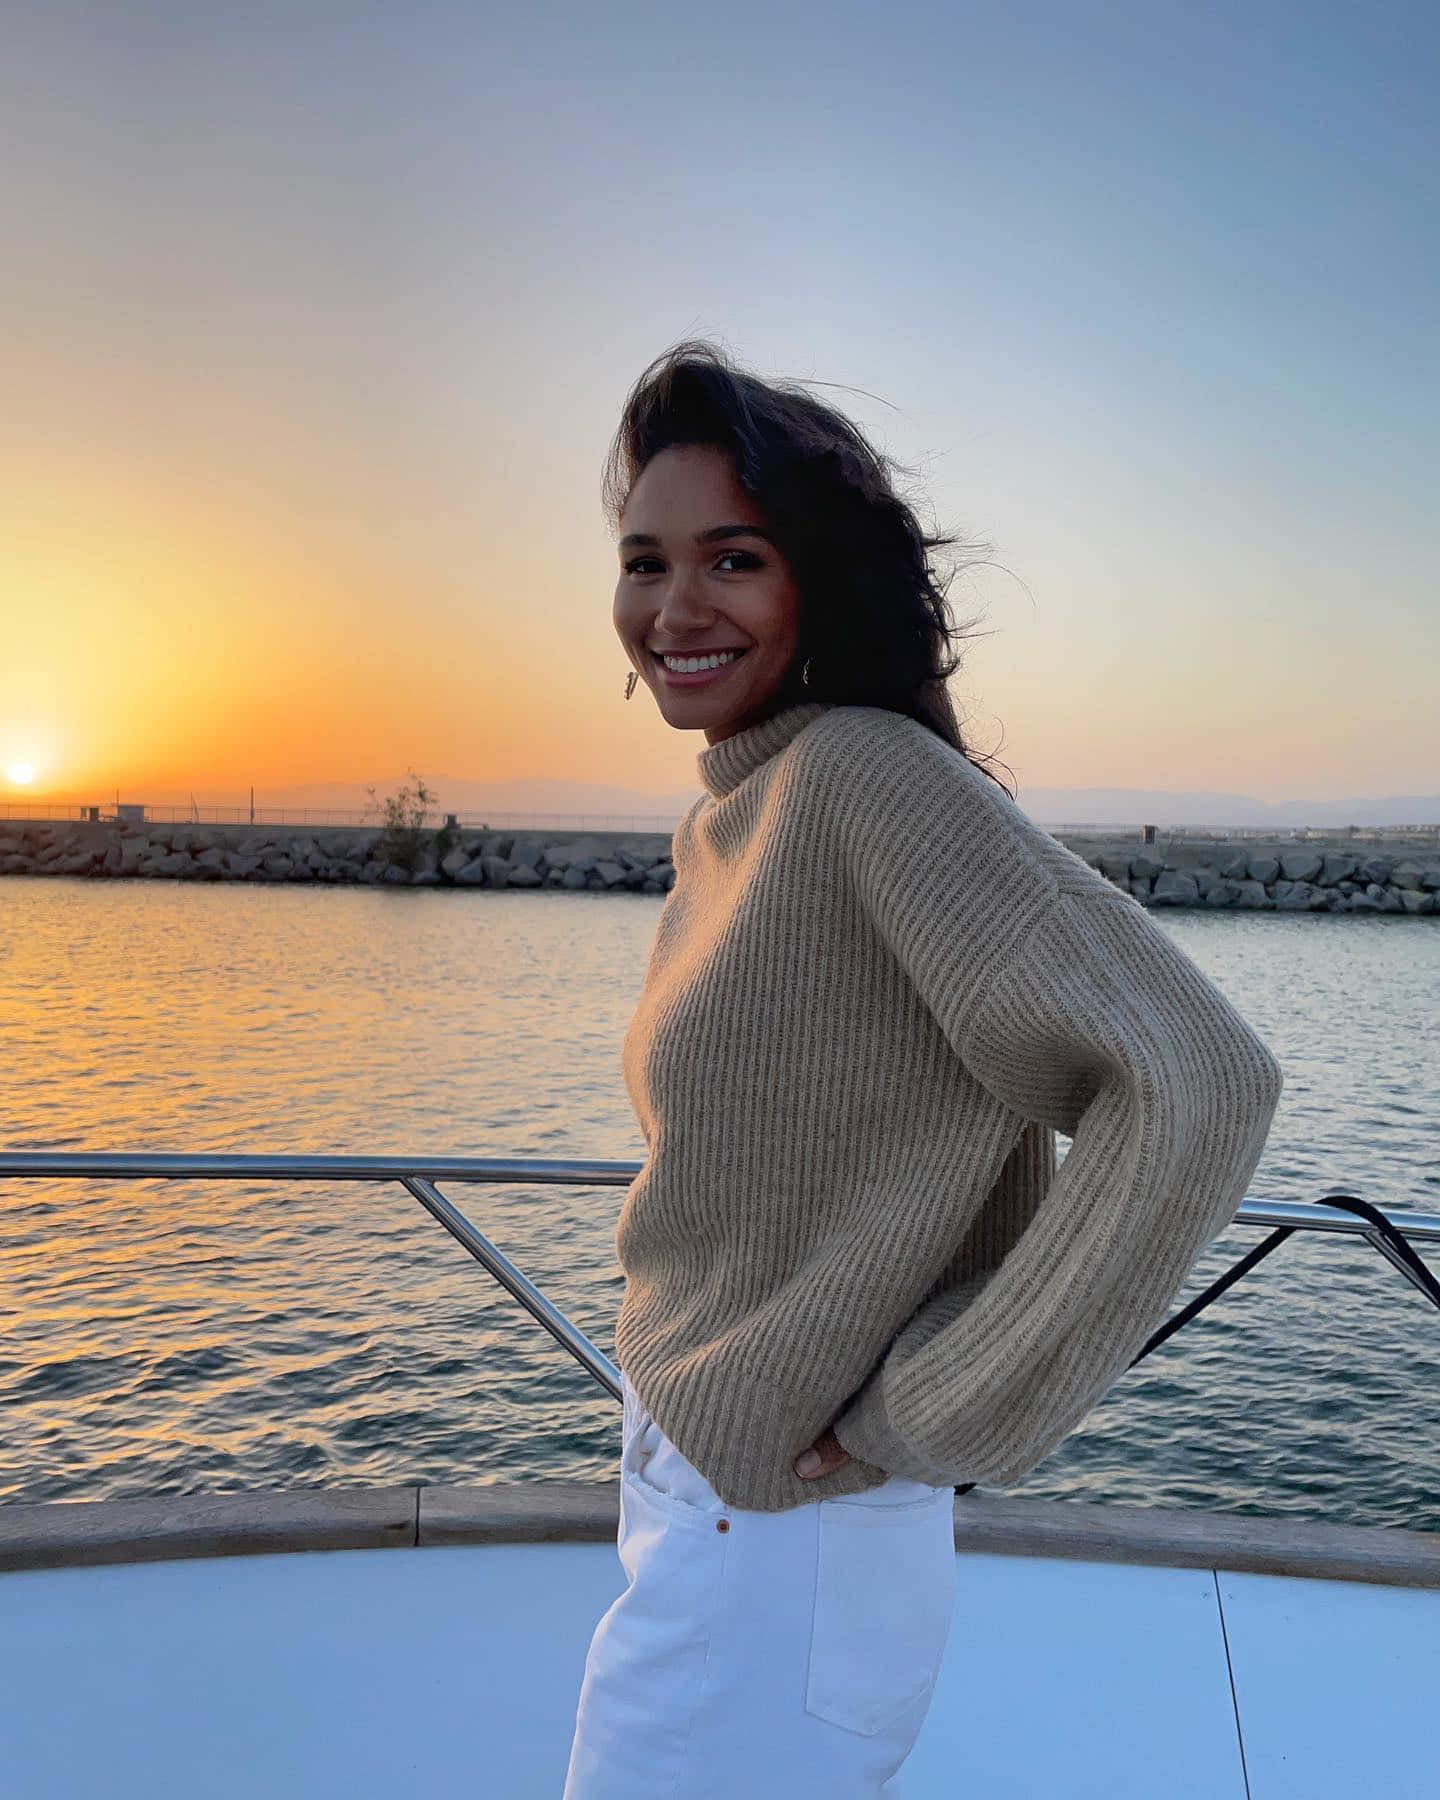 Sunset Smile Aboard Yacht Wallpaper